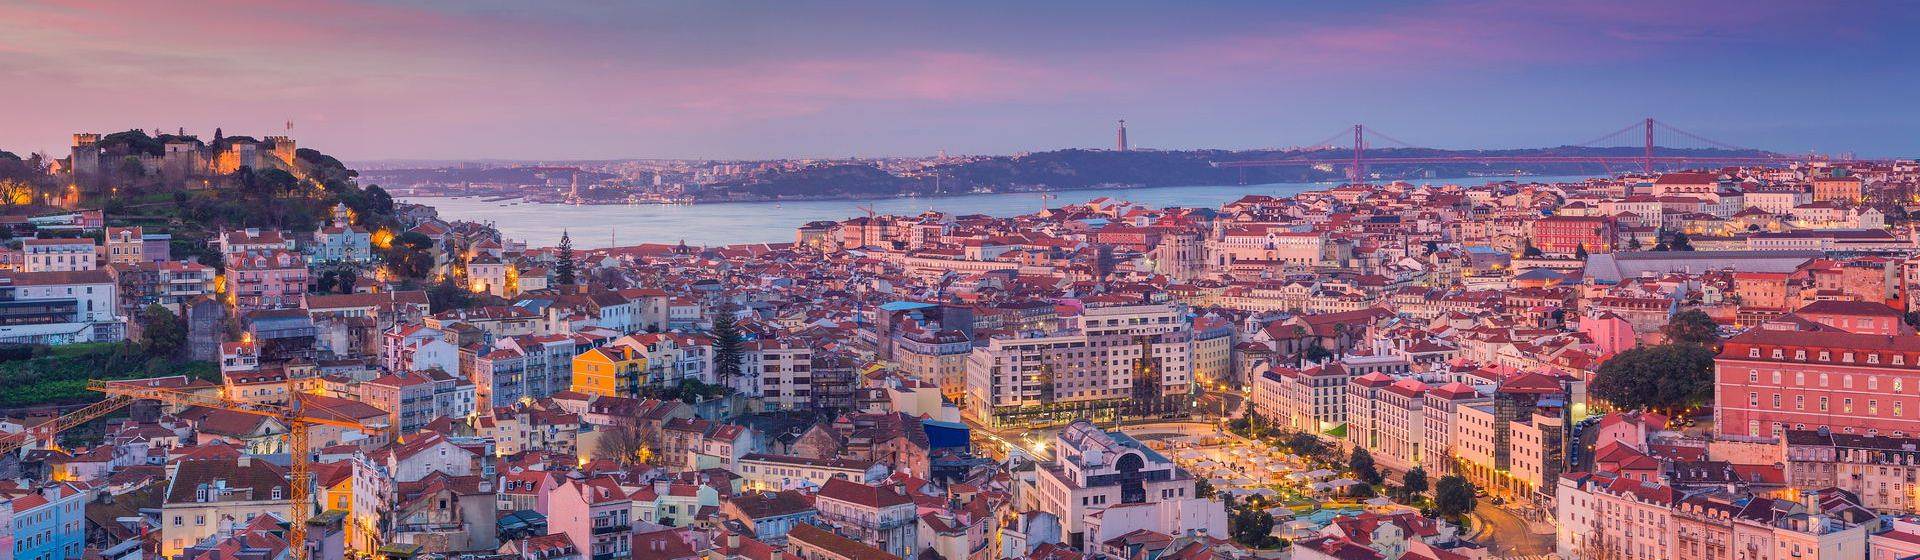 Holidays to Lisbon Image